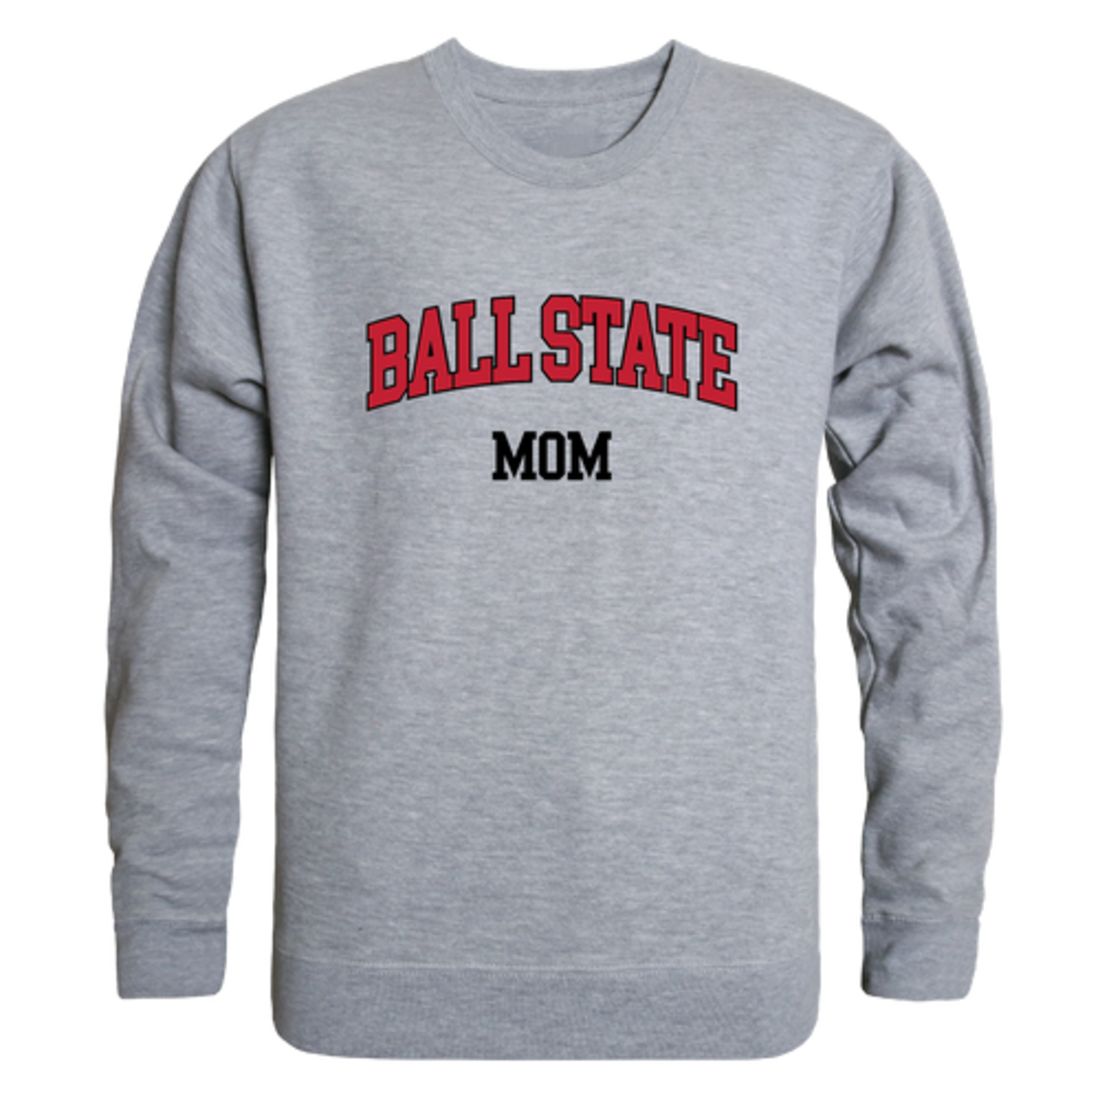 W Republic BSU Ball State University Cardinals Mom Fleece Crewneck Pullover Sweatshirt Heather Grey Medium, Gray